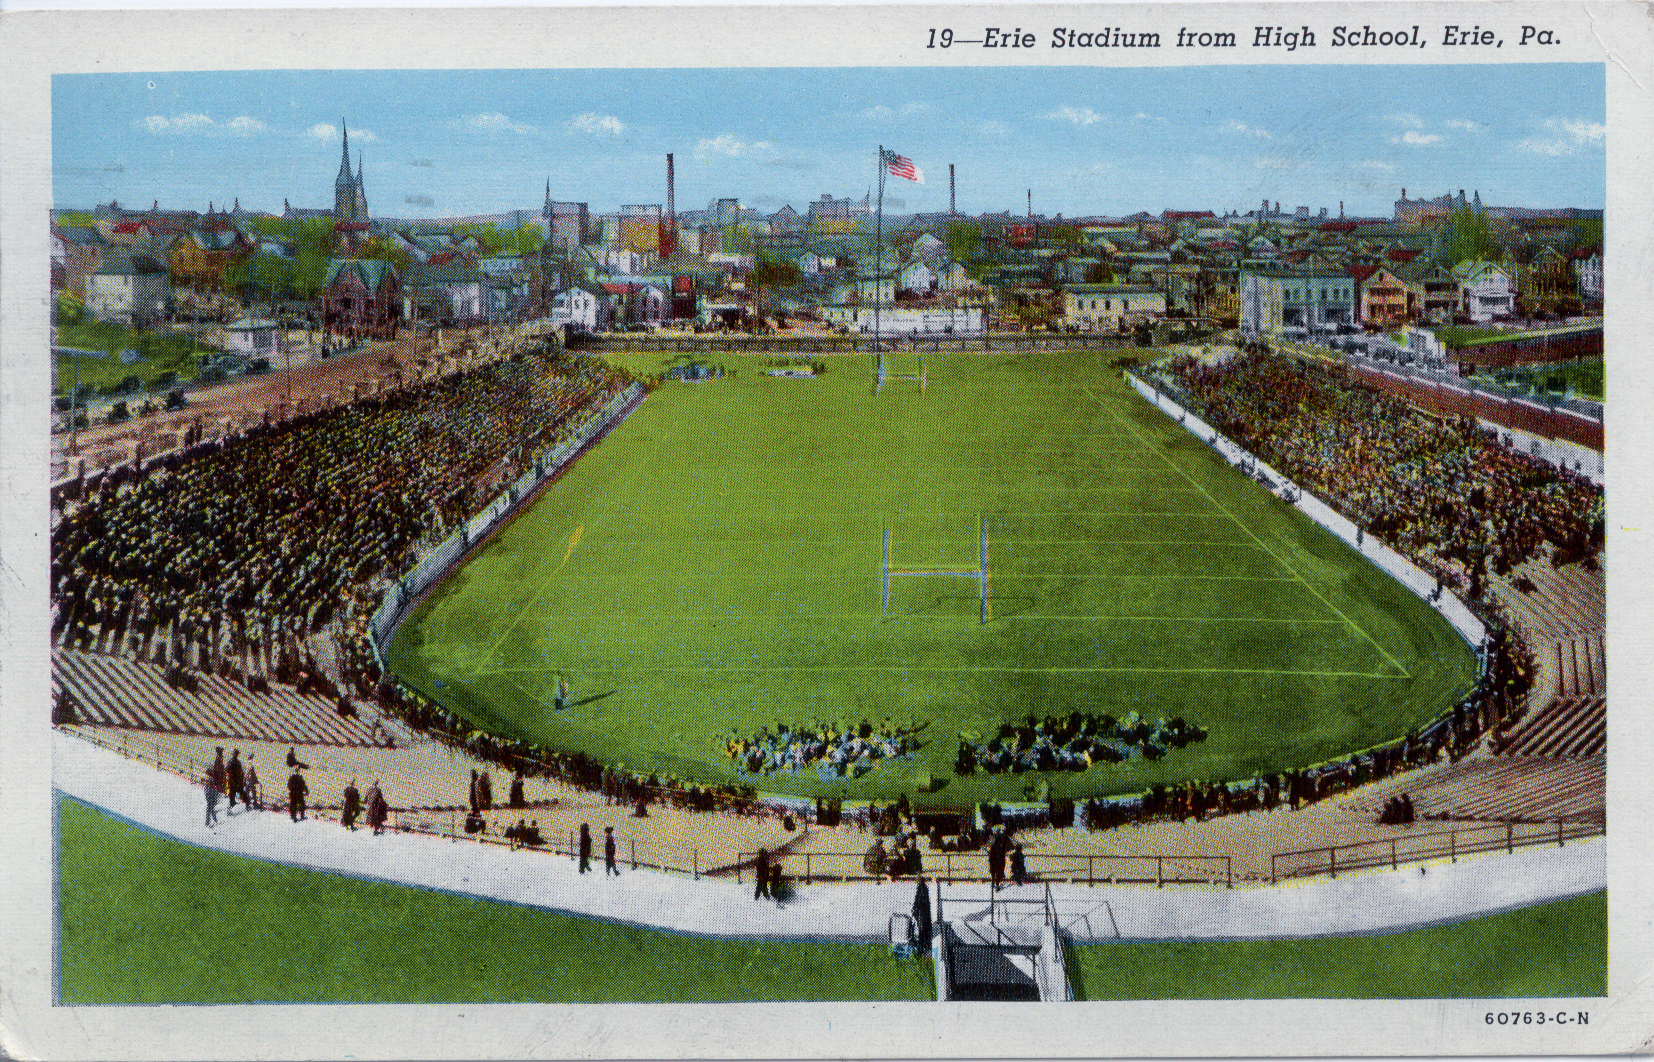 Erie Stadium from High School, Erie PA